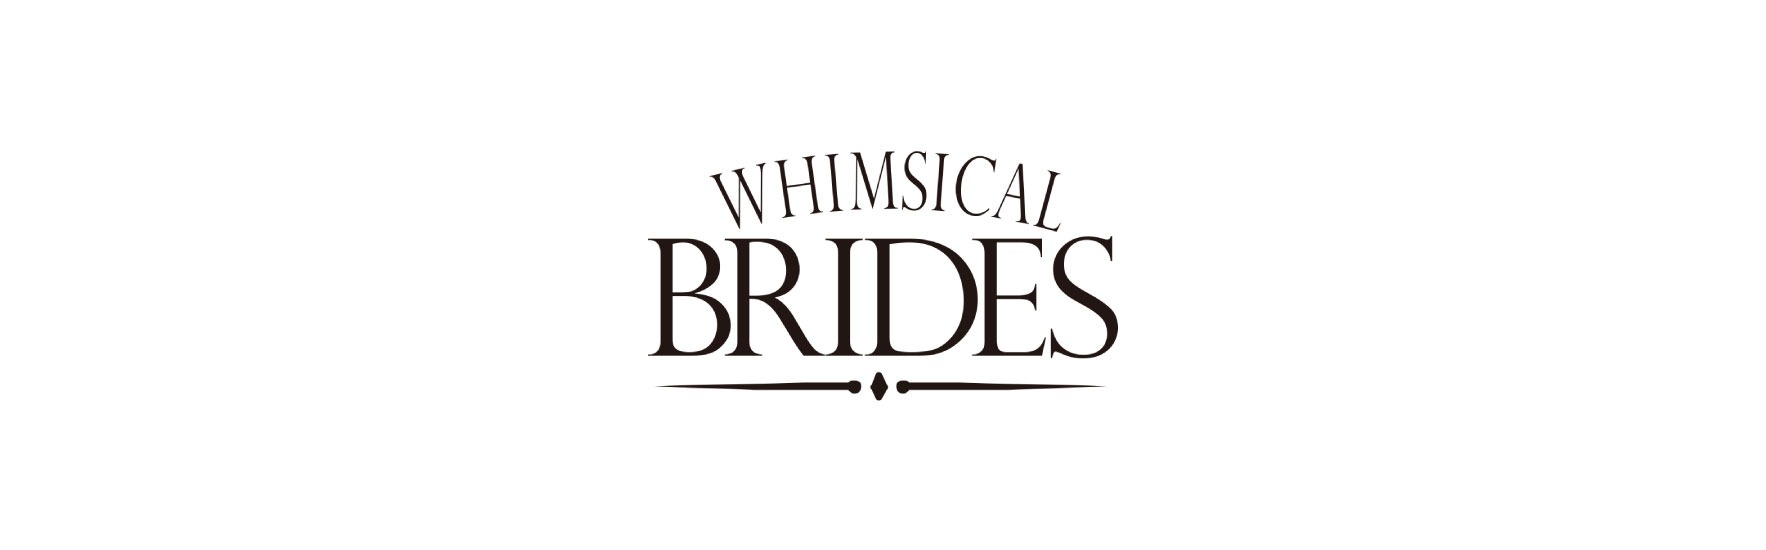 Whimsical Brides